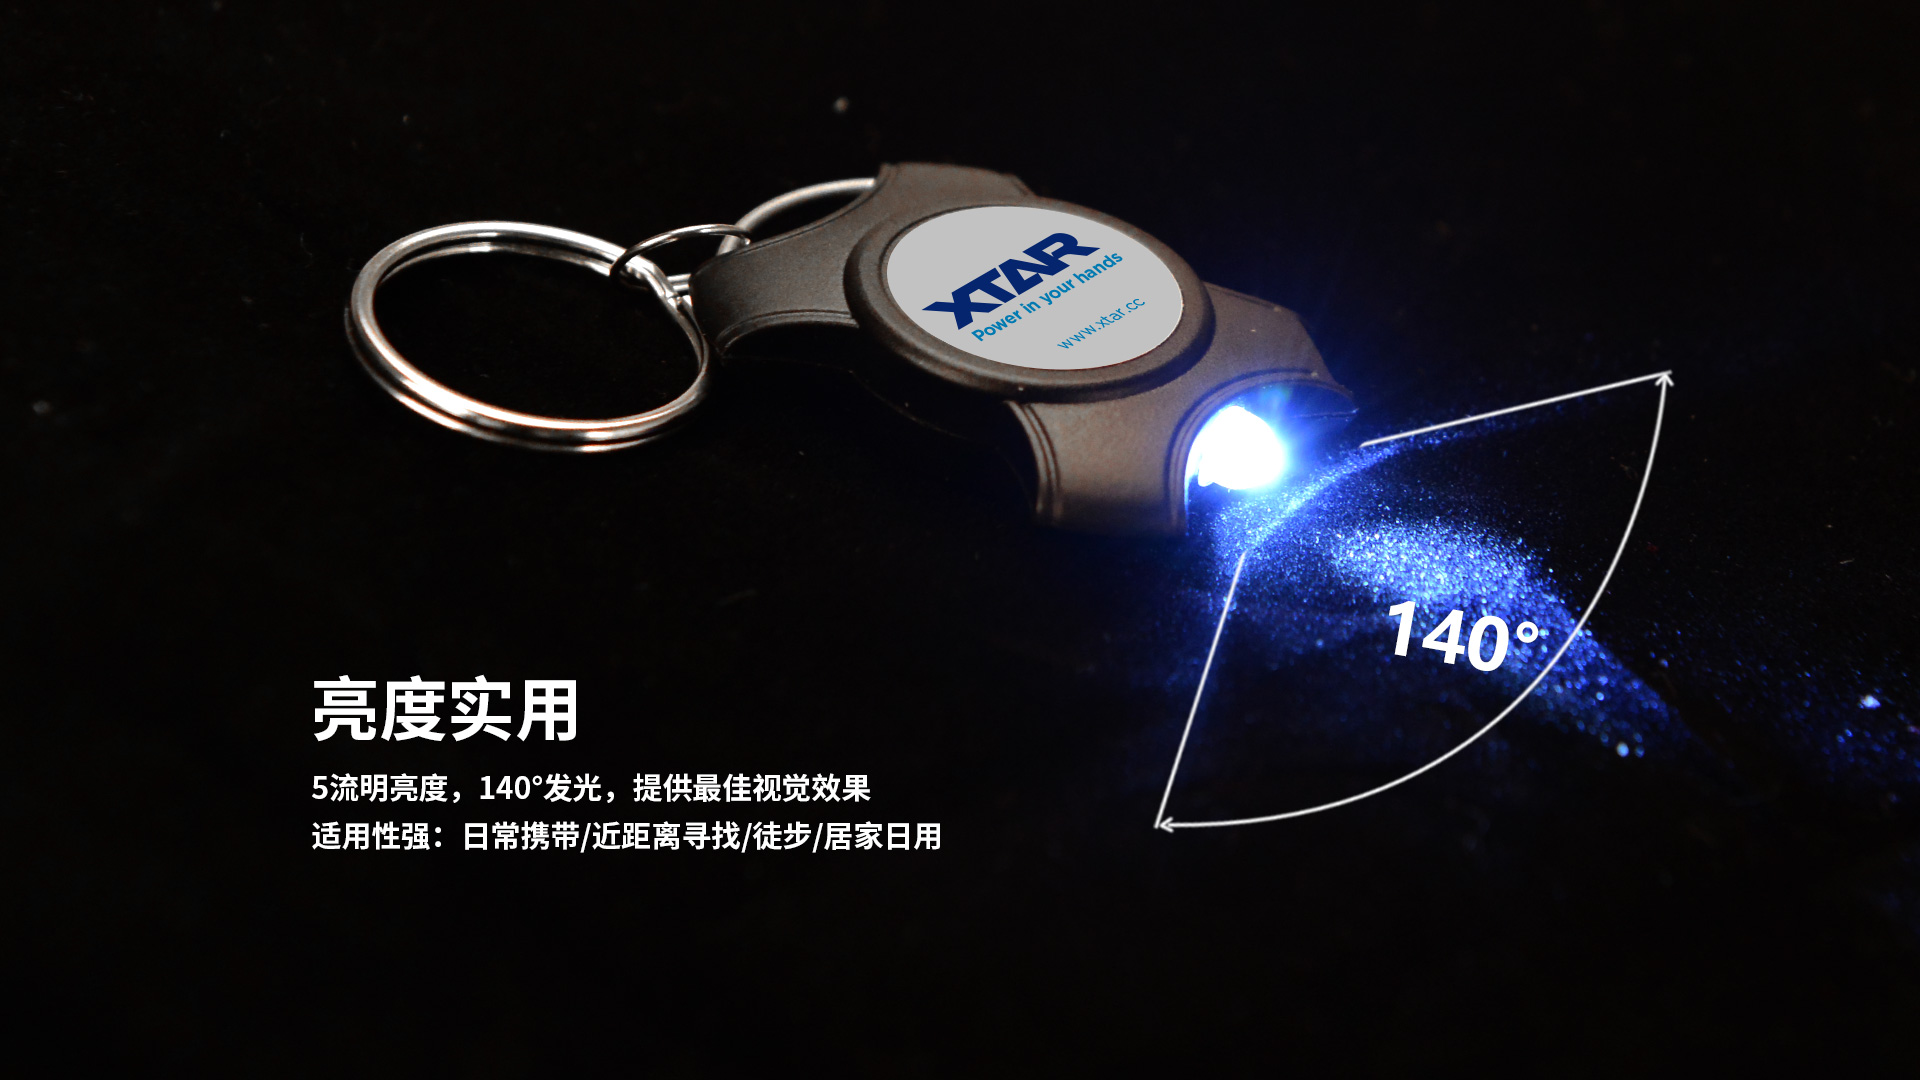 X-CRAFT USB Key Light